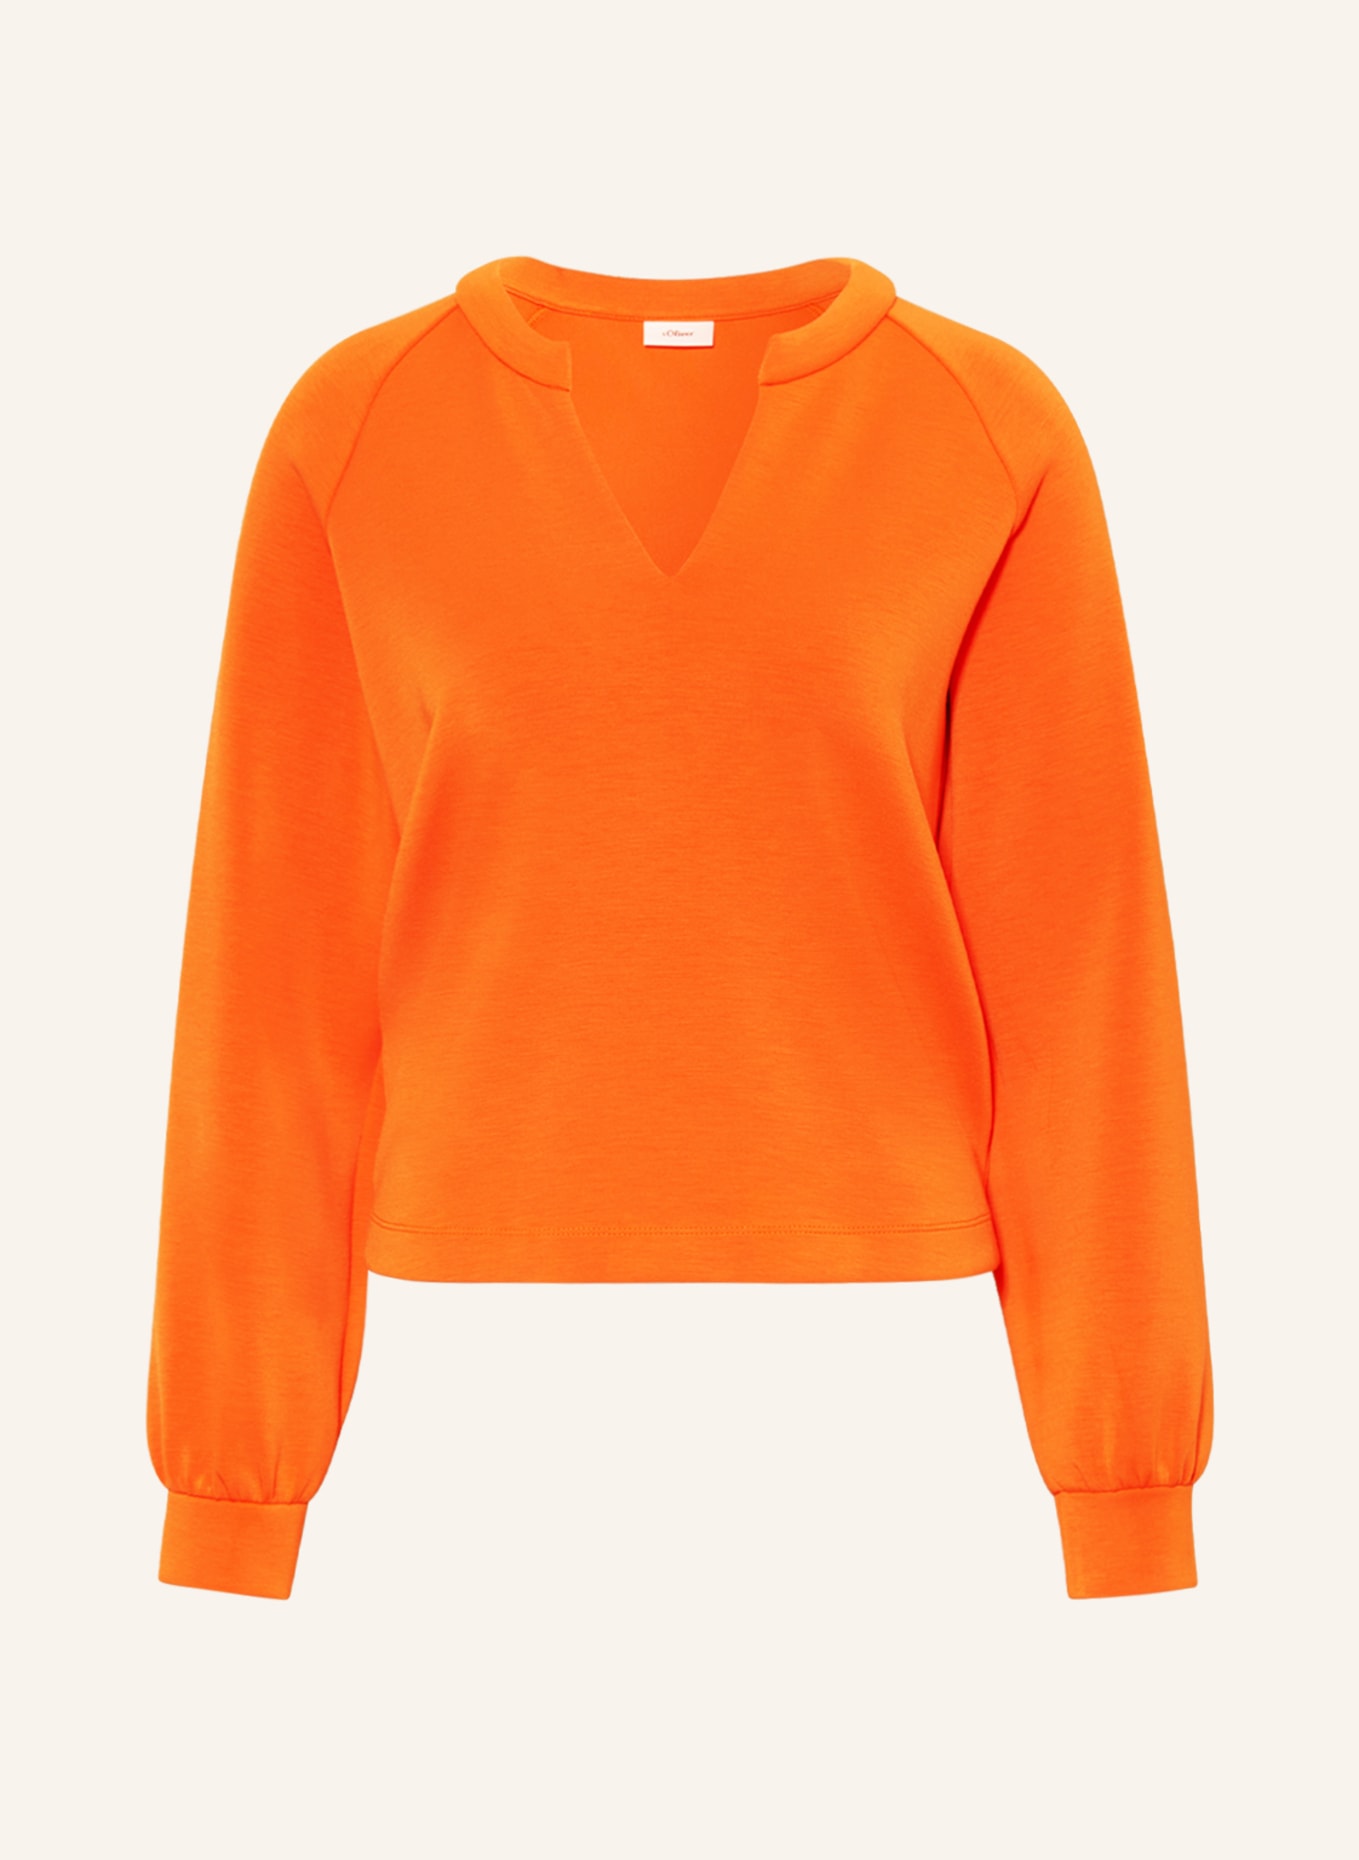 LABEL in BLACK Sweatshirt orange s.Oliver